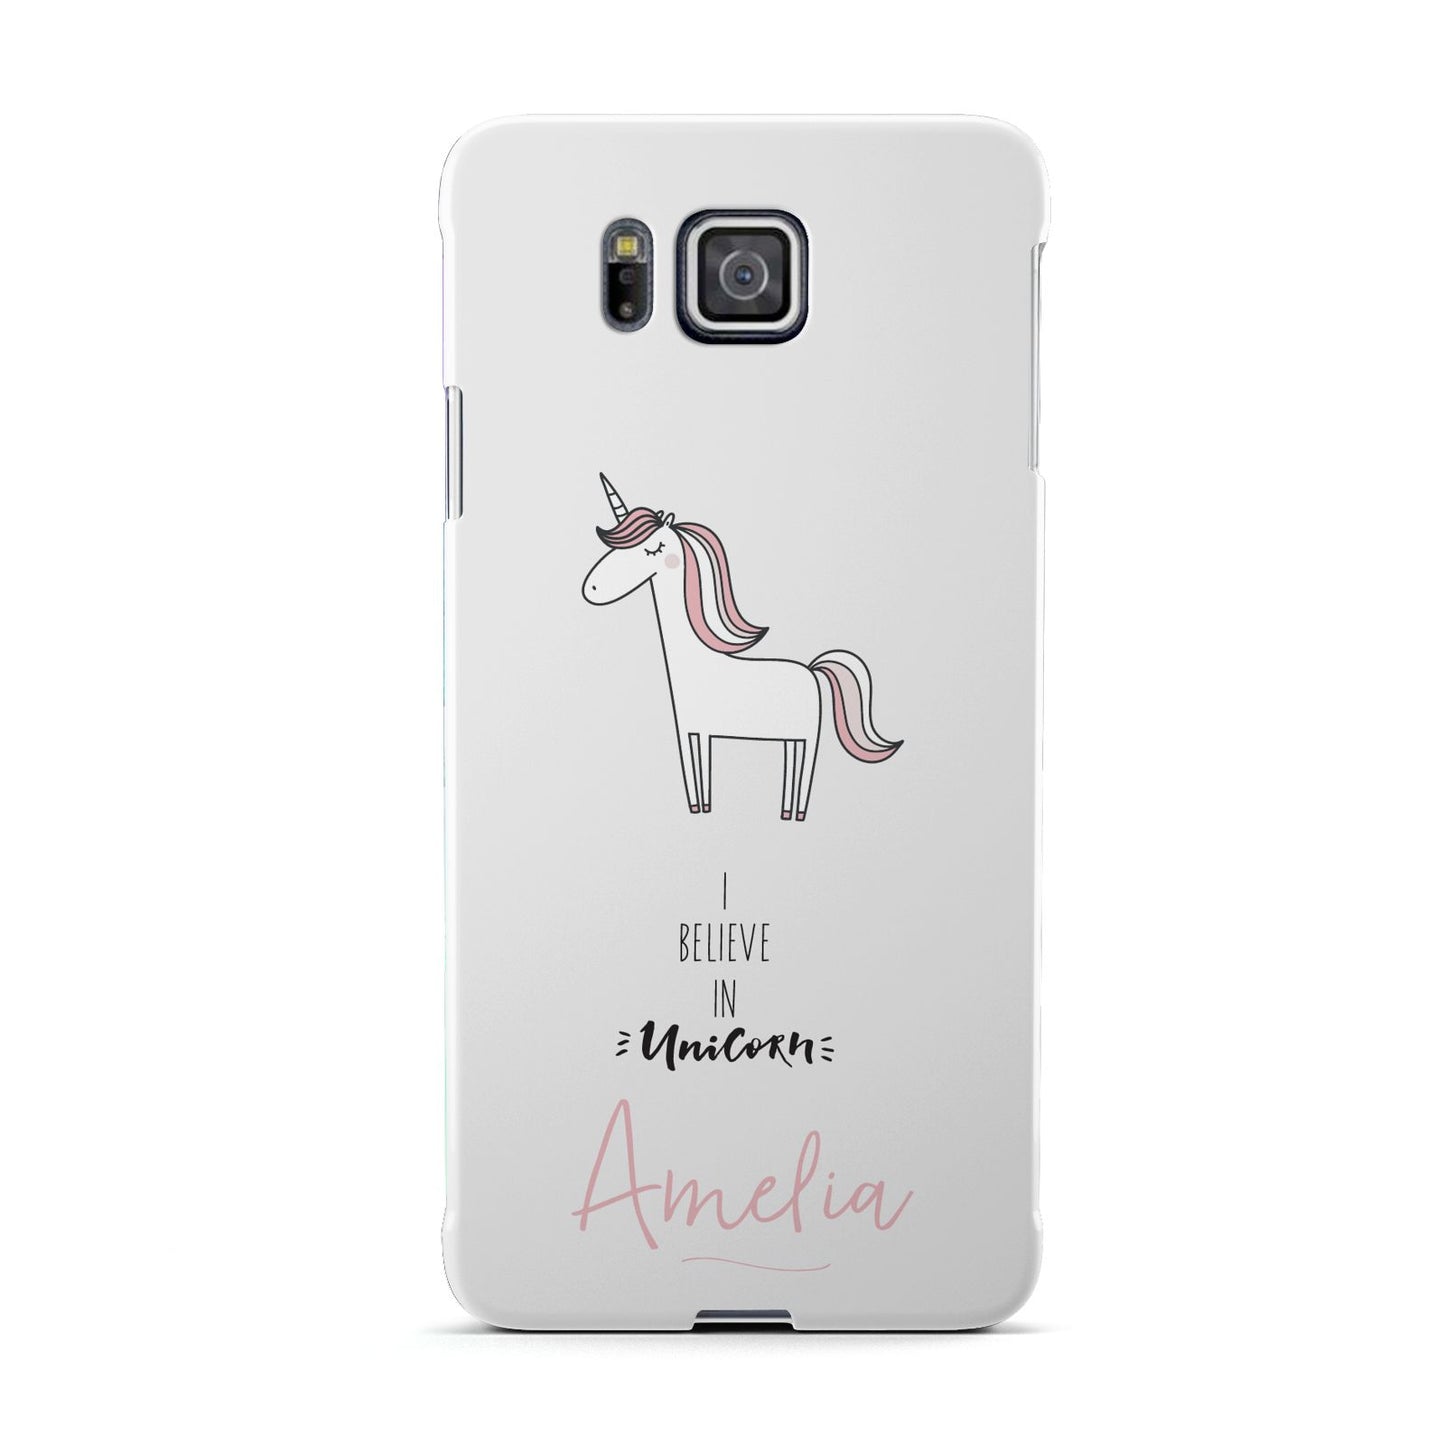 I Believe in Unicorn Samsung Galaxy Alpha Case